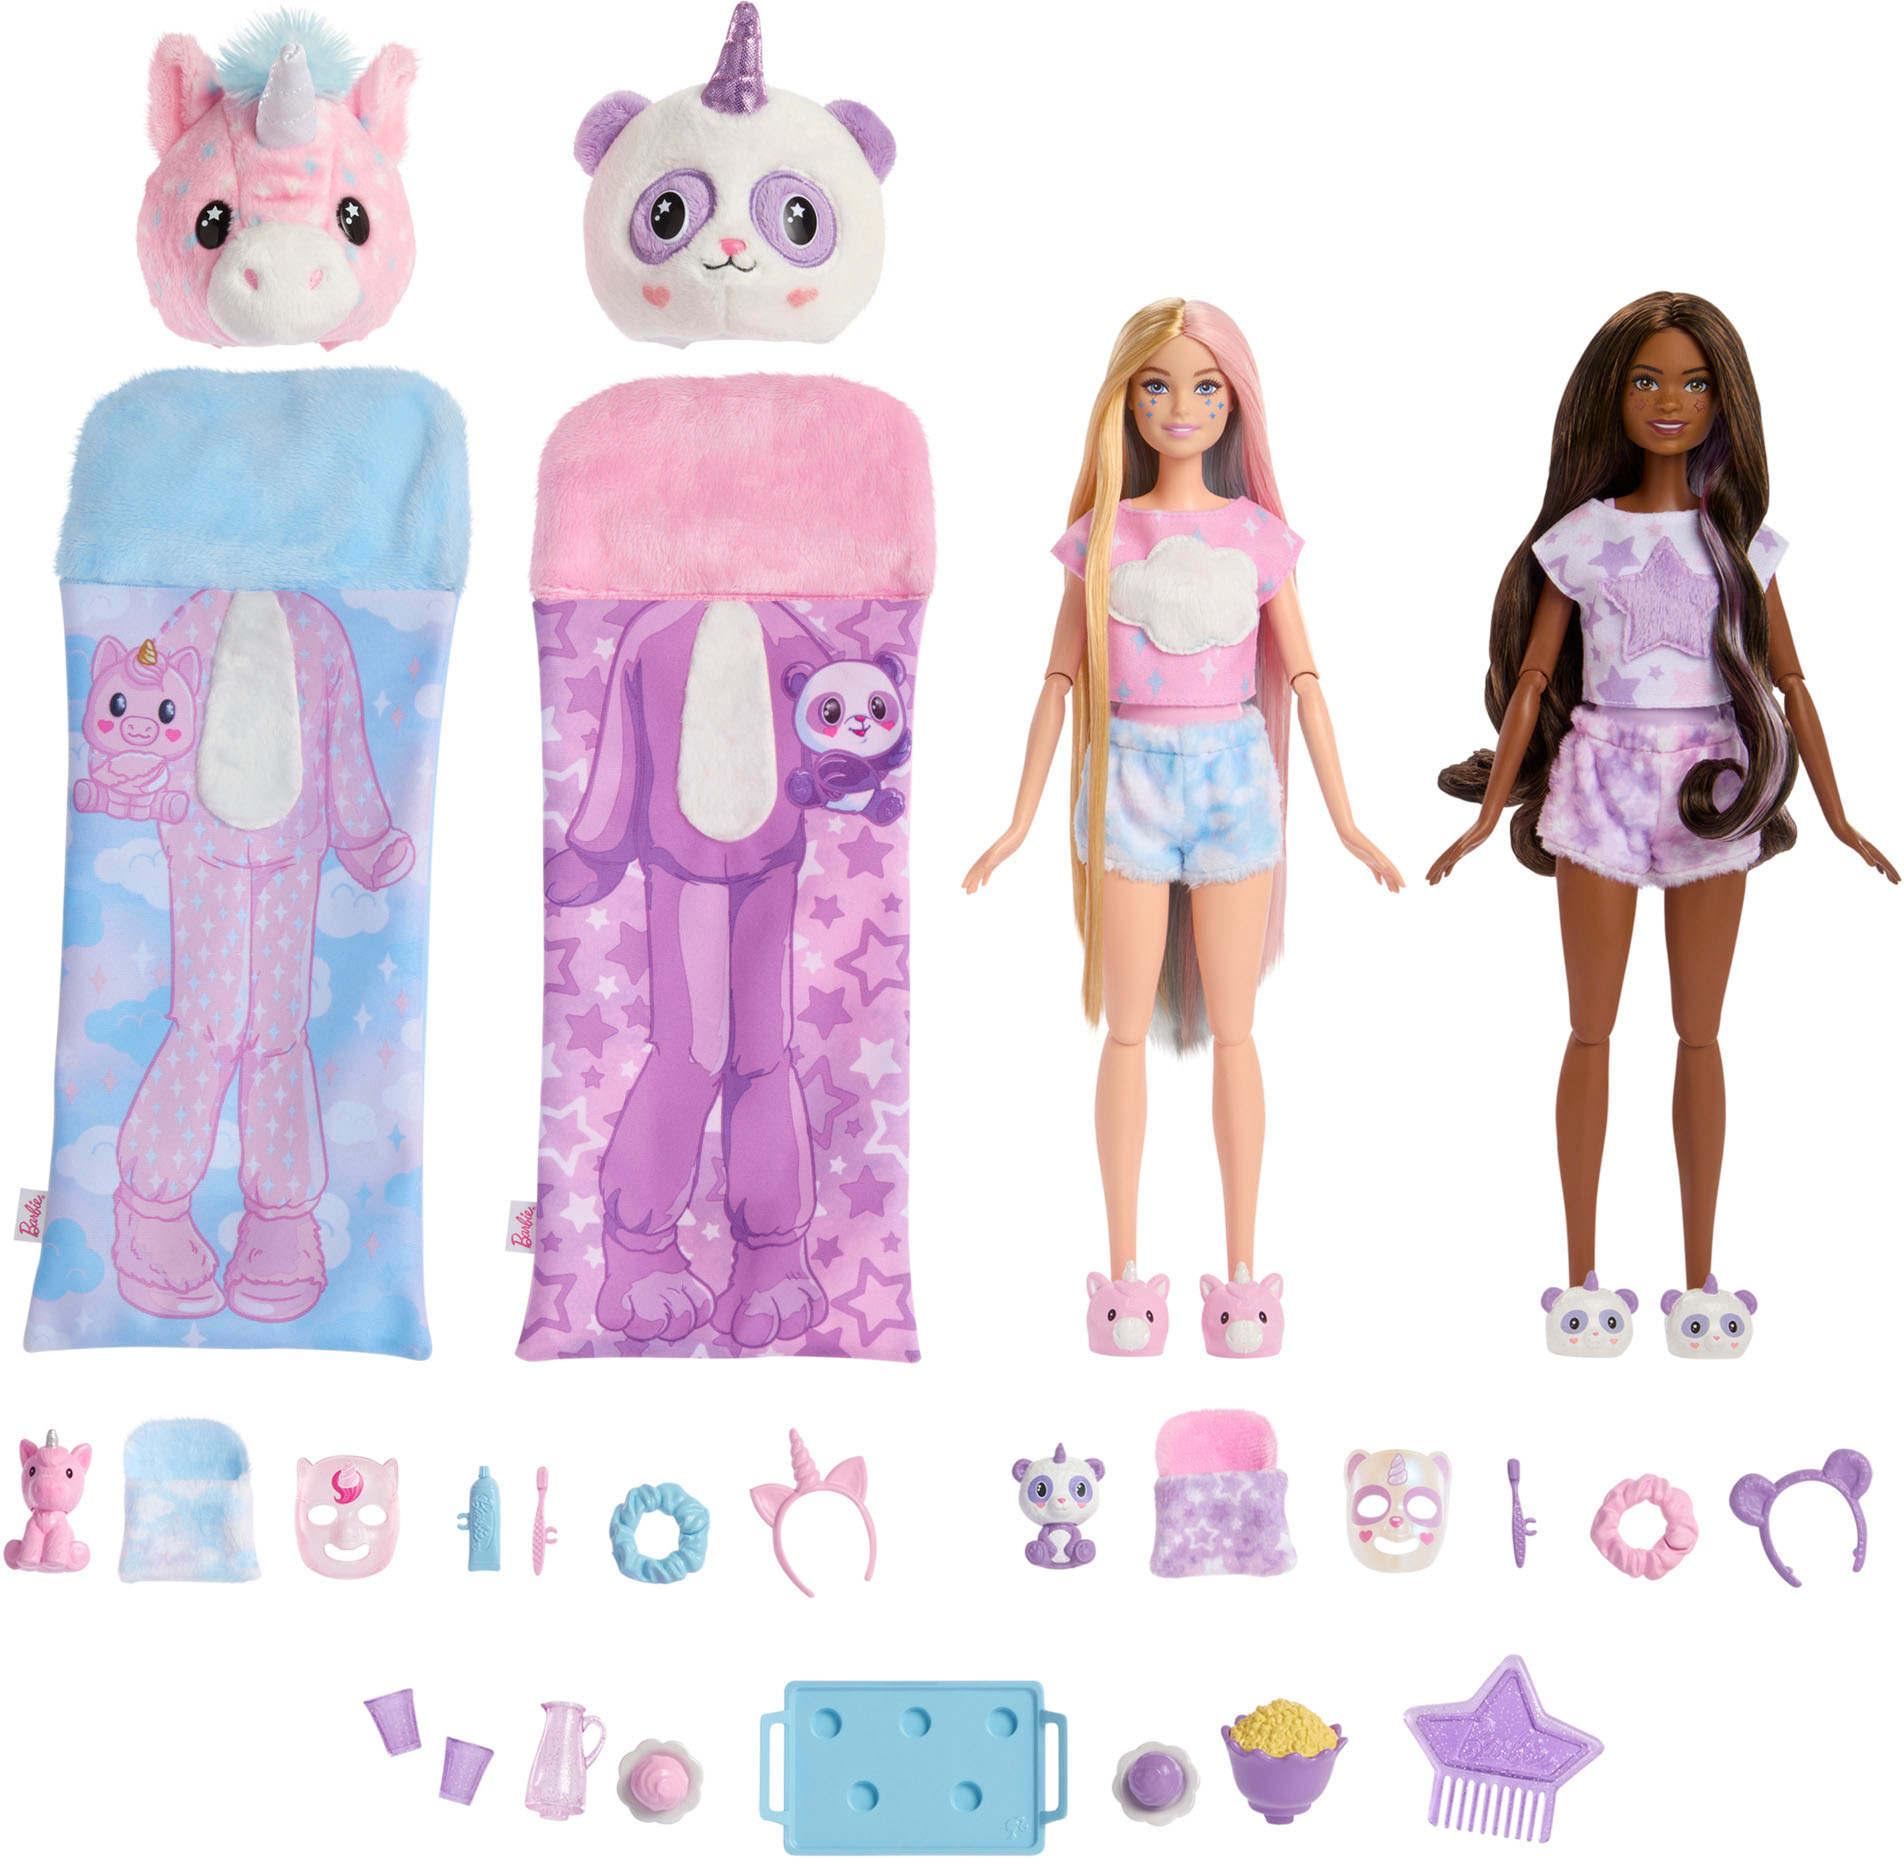 Barbie Wildlife Fashion Storytelling Pack